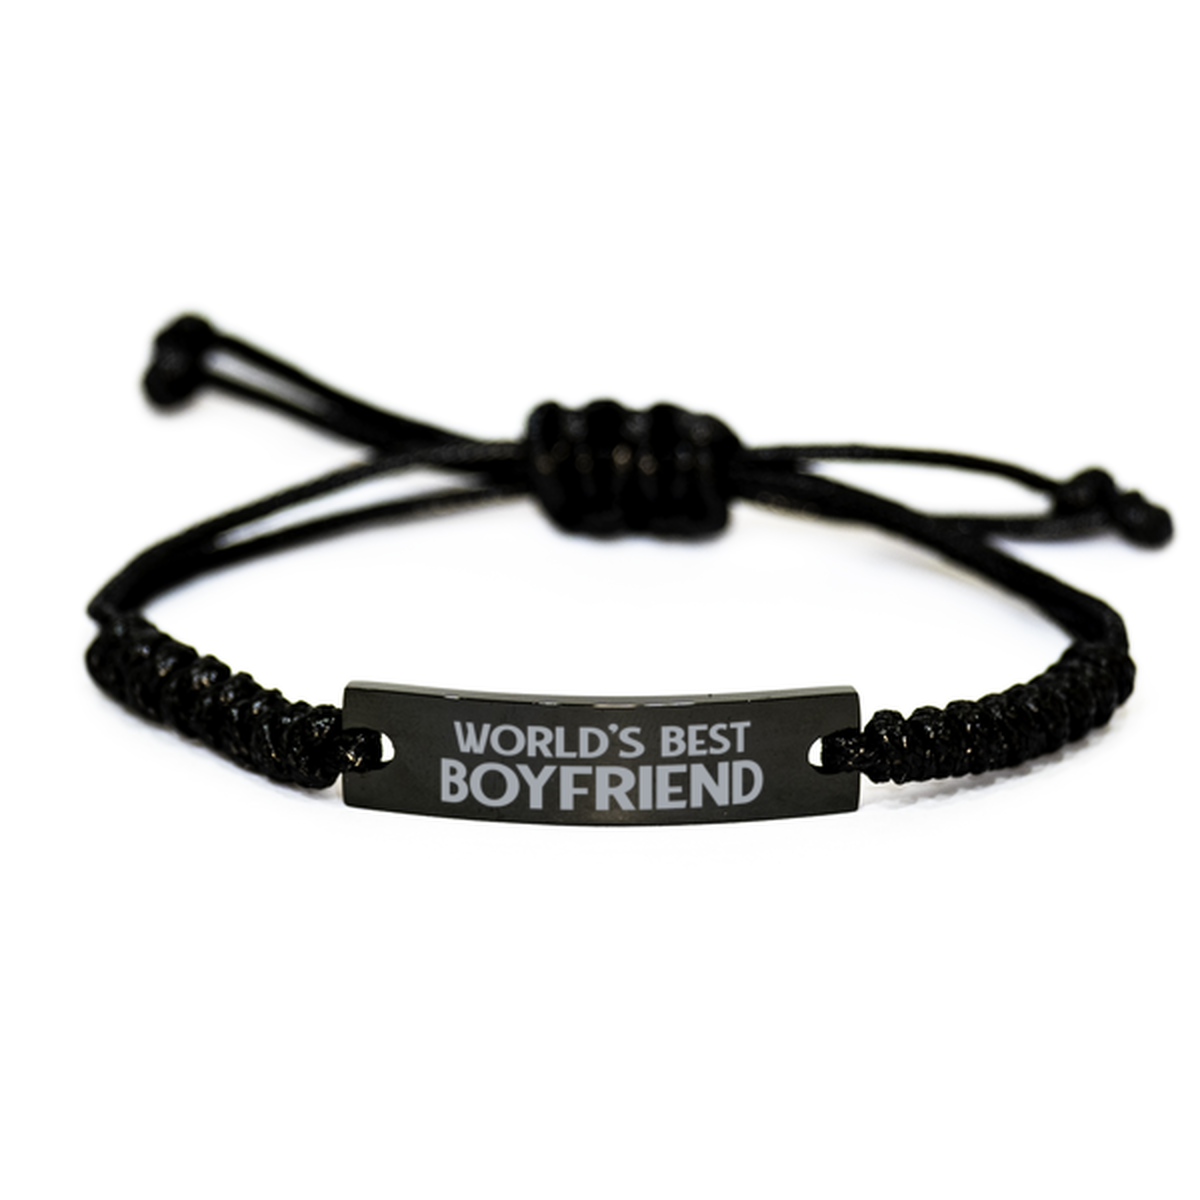 World's Best Boyfriend Gifts, Funny Engraved Rope Bracelet For Boyfriend, Birthday Family Gifts For Men